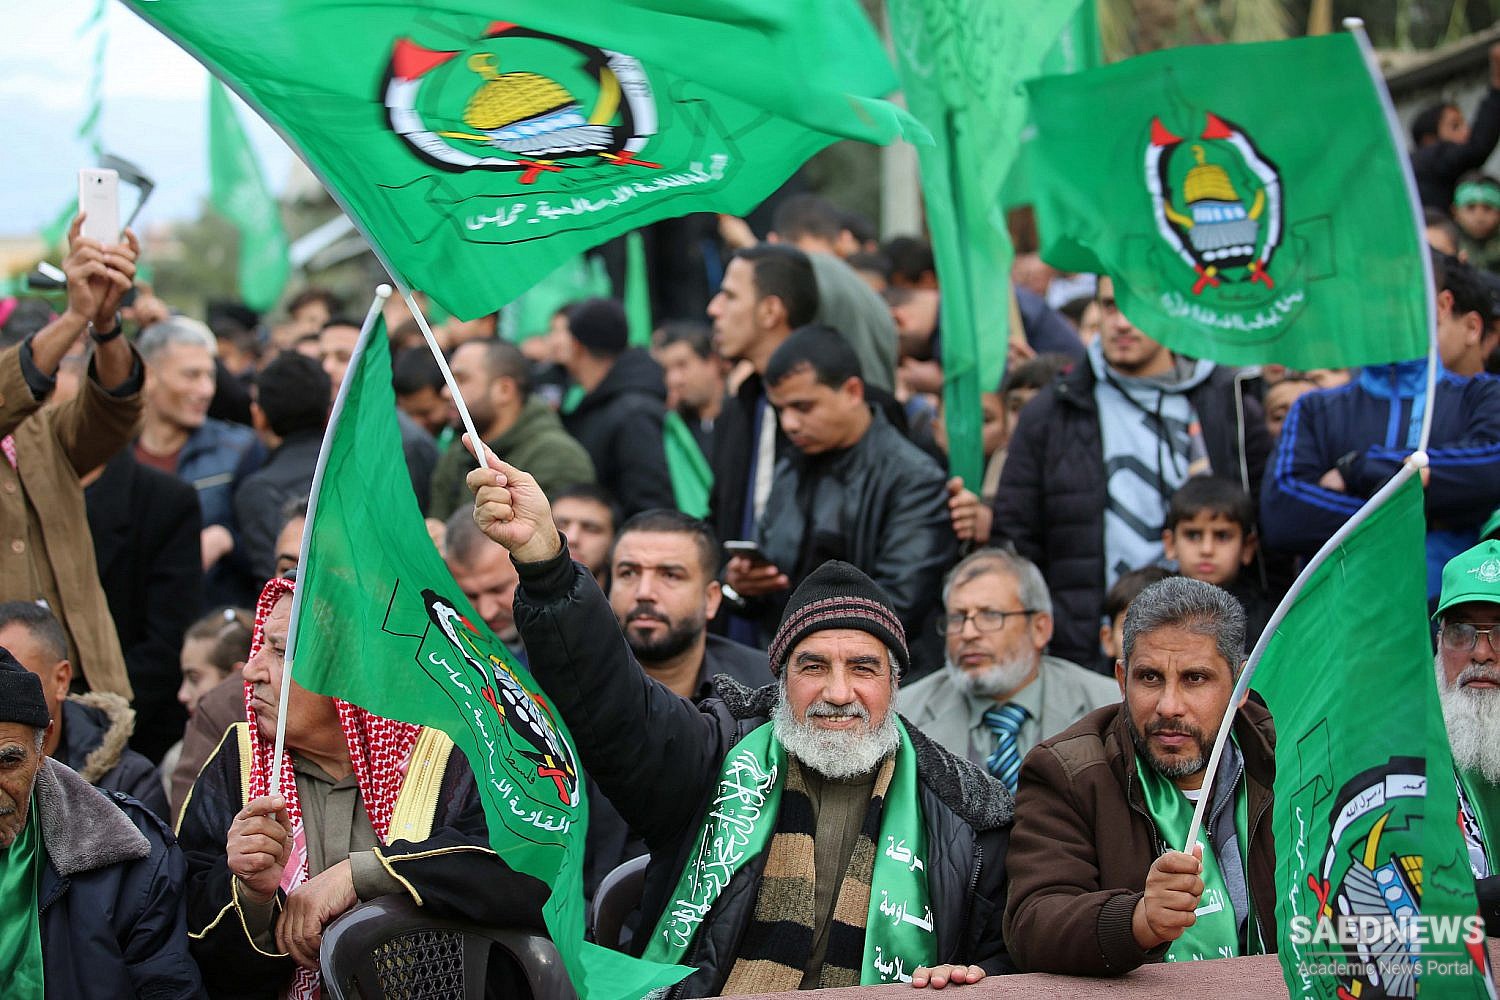 Is Hamas genuinely democratic?